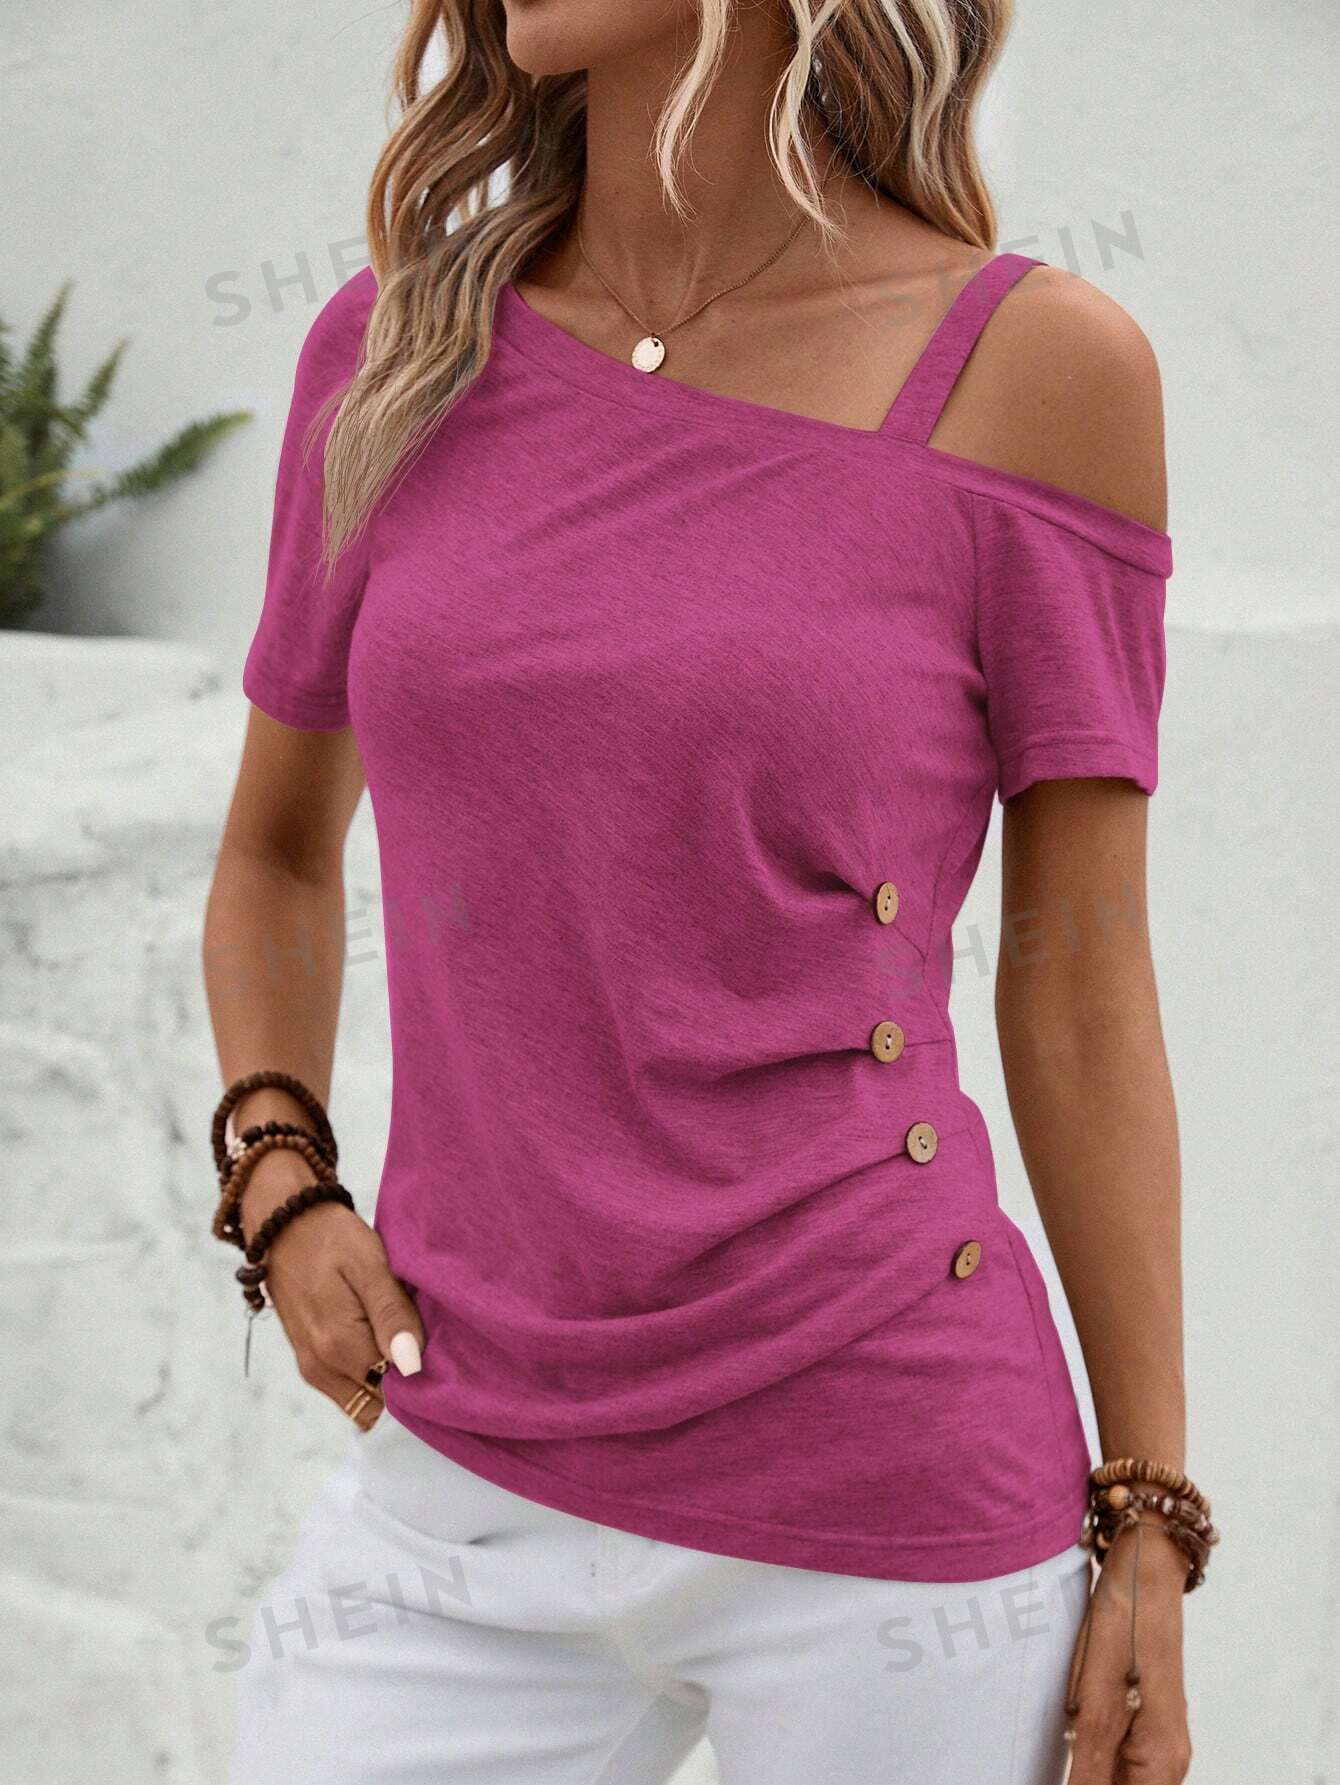 SHEIN Clasi Асимметричная футболка с воротником и пуговицами, ярко-розовый